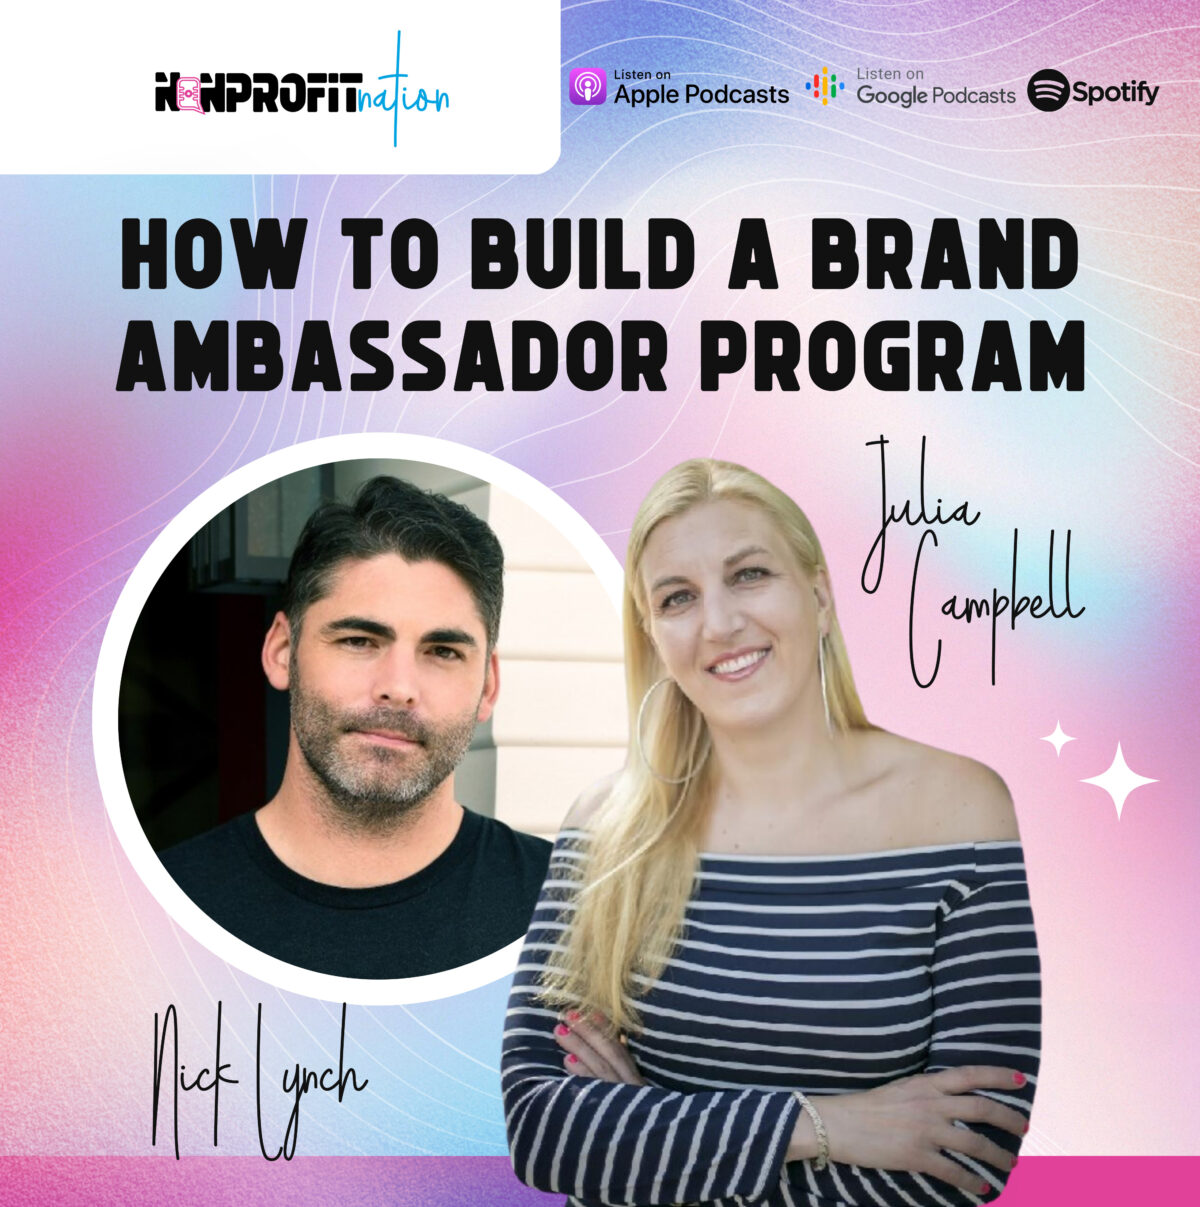 How to Build a Brand Ambassador Program with Nick Lynch